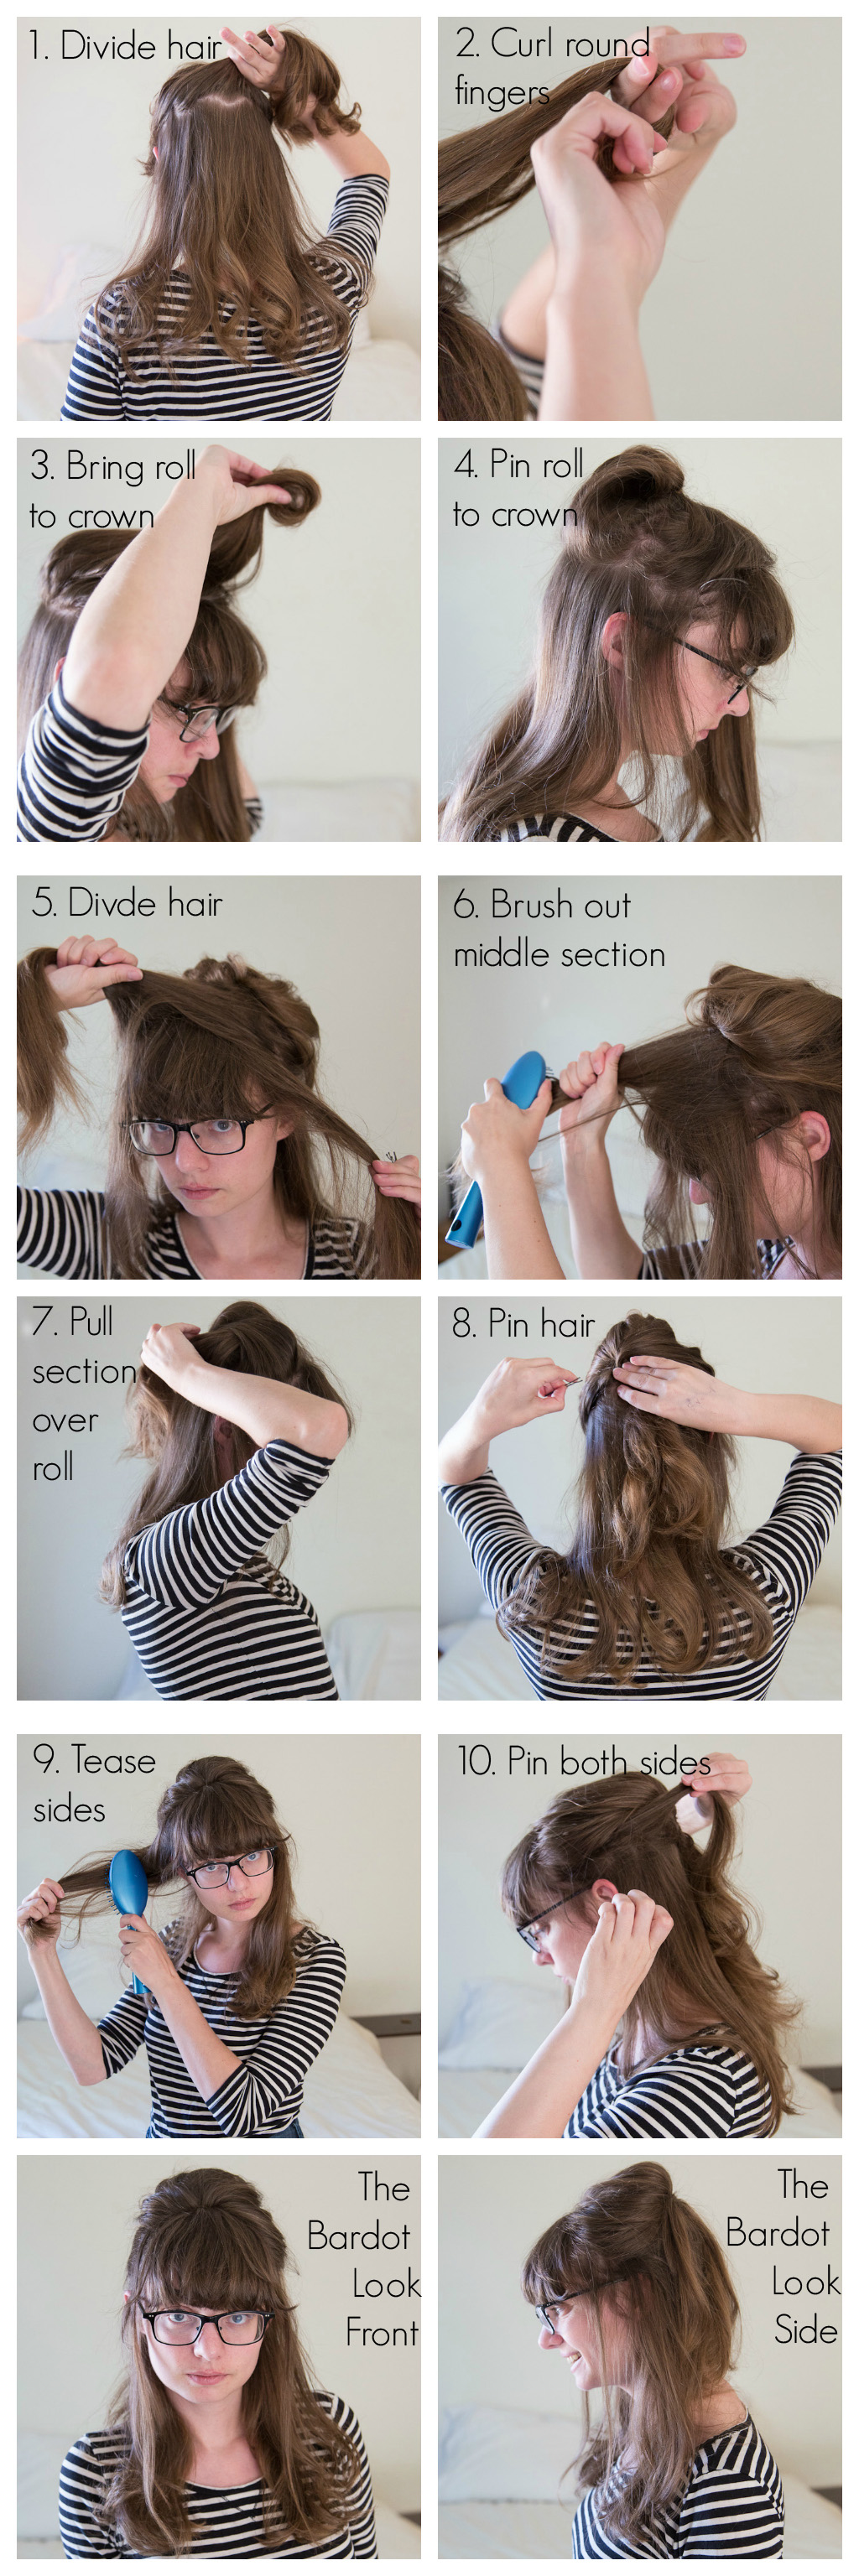 Bardot Hair Instructions